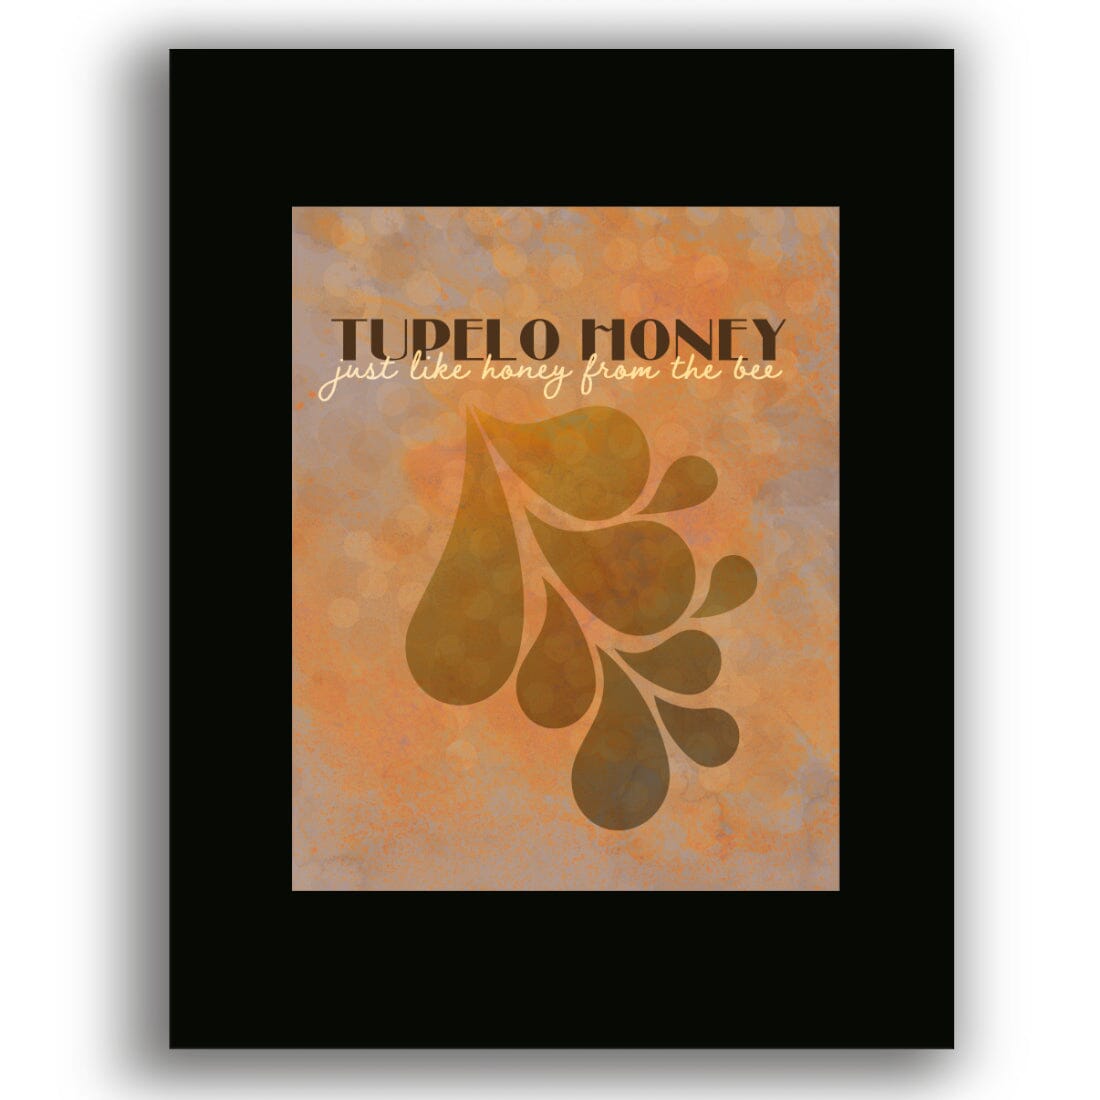 Tupelo Honey by Van Morrison - Rock Music Song Lyric Art Song Lyrics Art Song Lyrics Art 8x10 Black Matted Print 